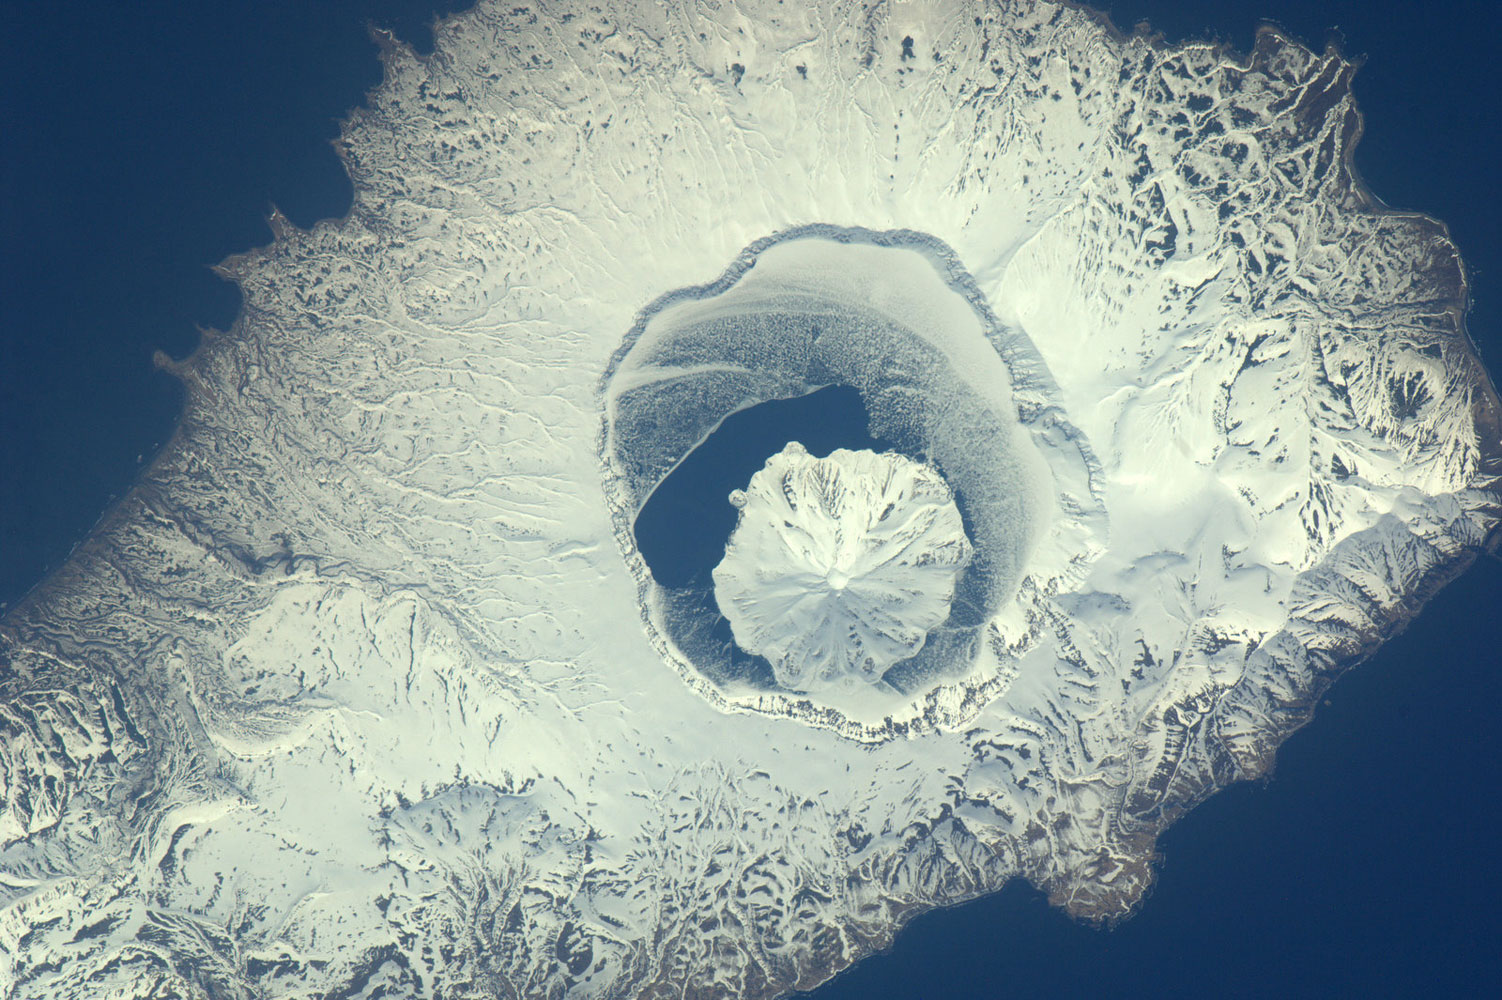 Volcano, Onekotan Island, Russia. May 23, 2011